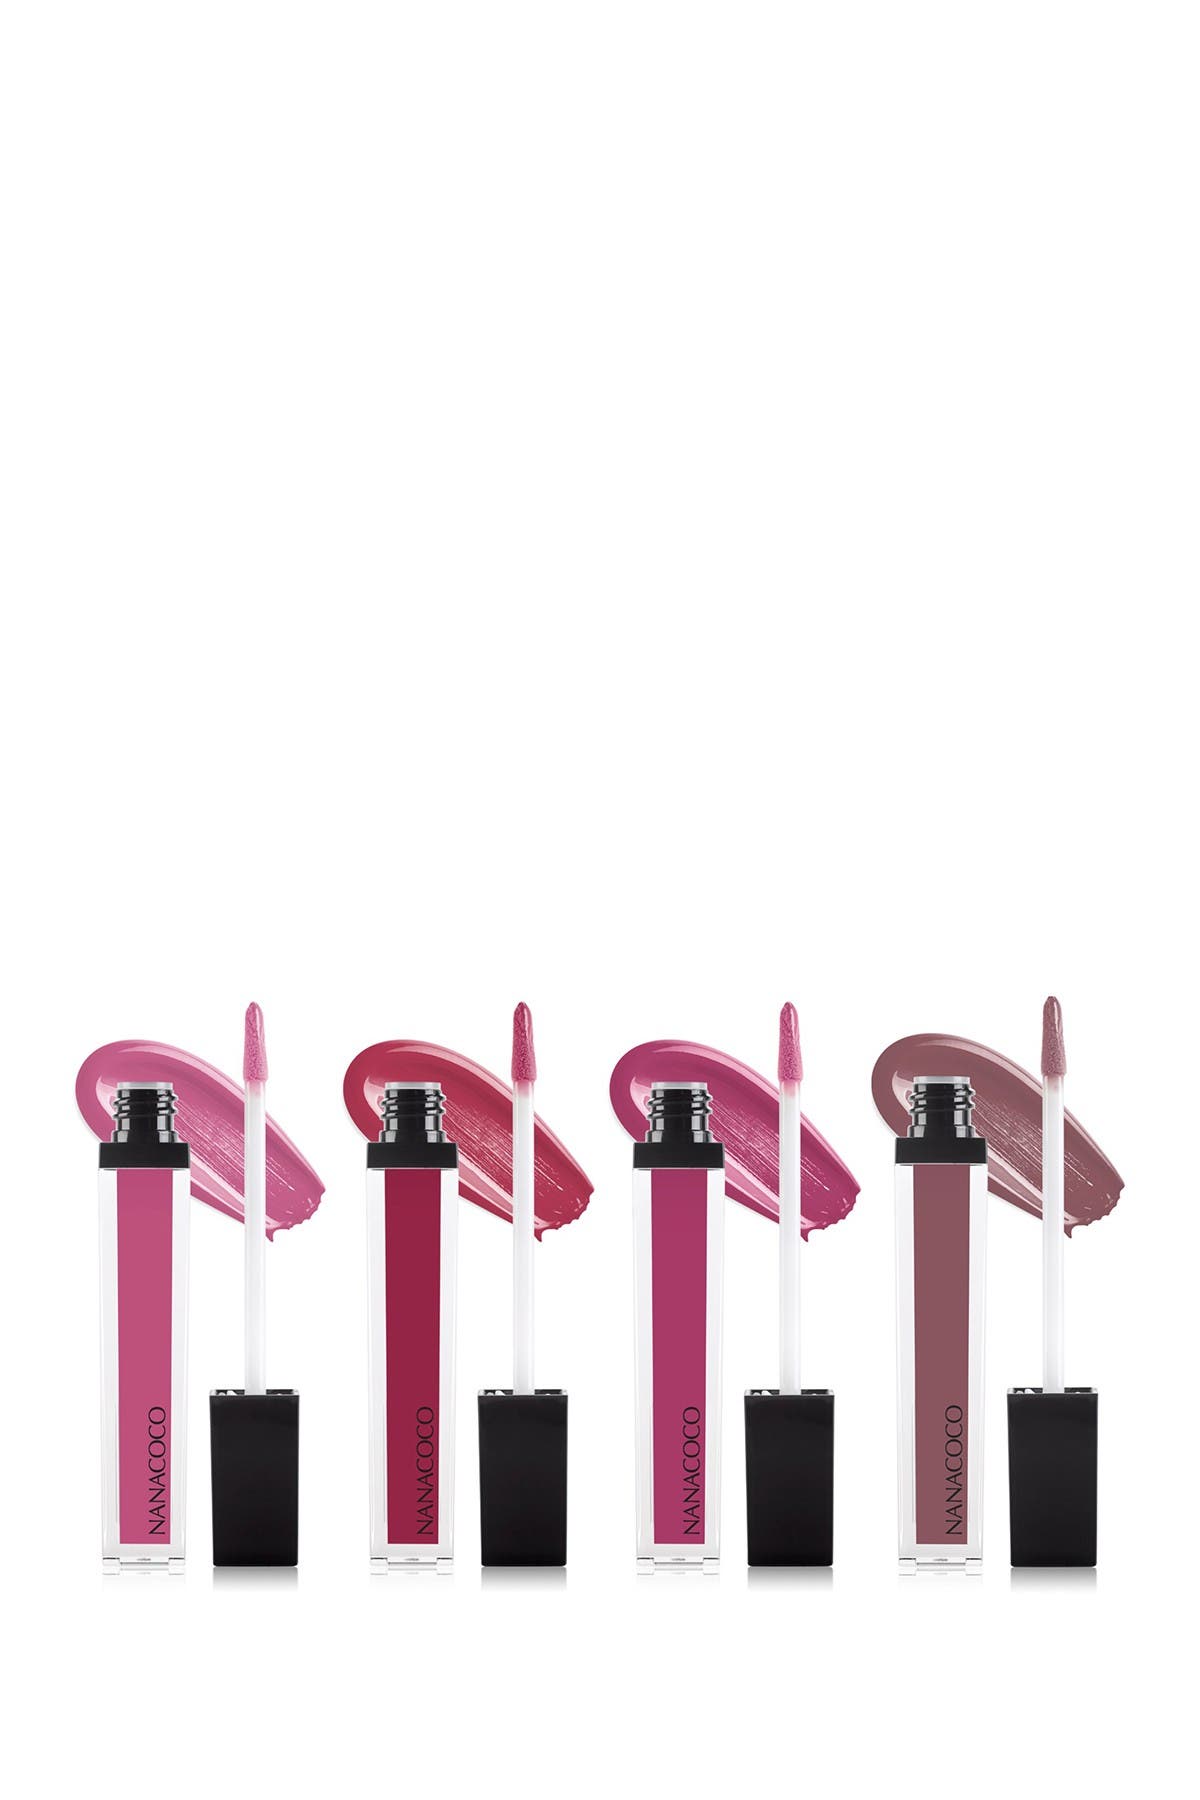 Nanacoco Pink Passions 4-piece Original Lip Gloss Collection